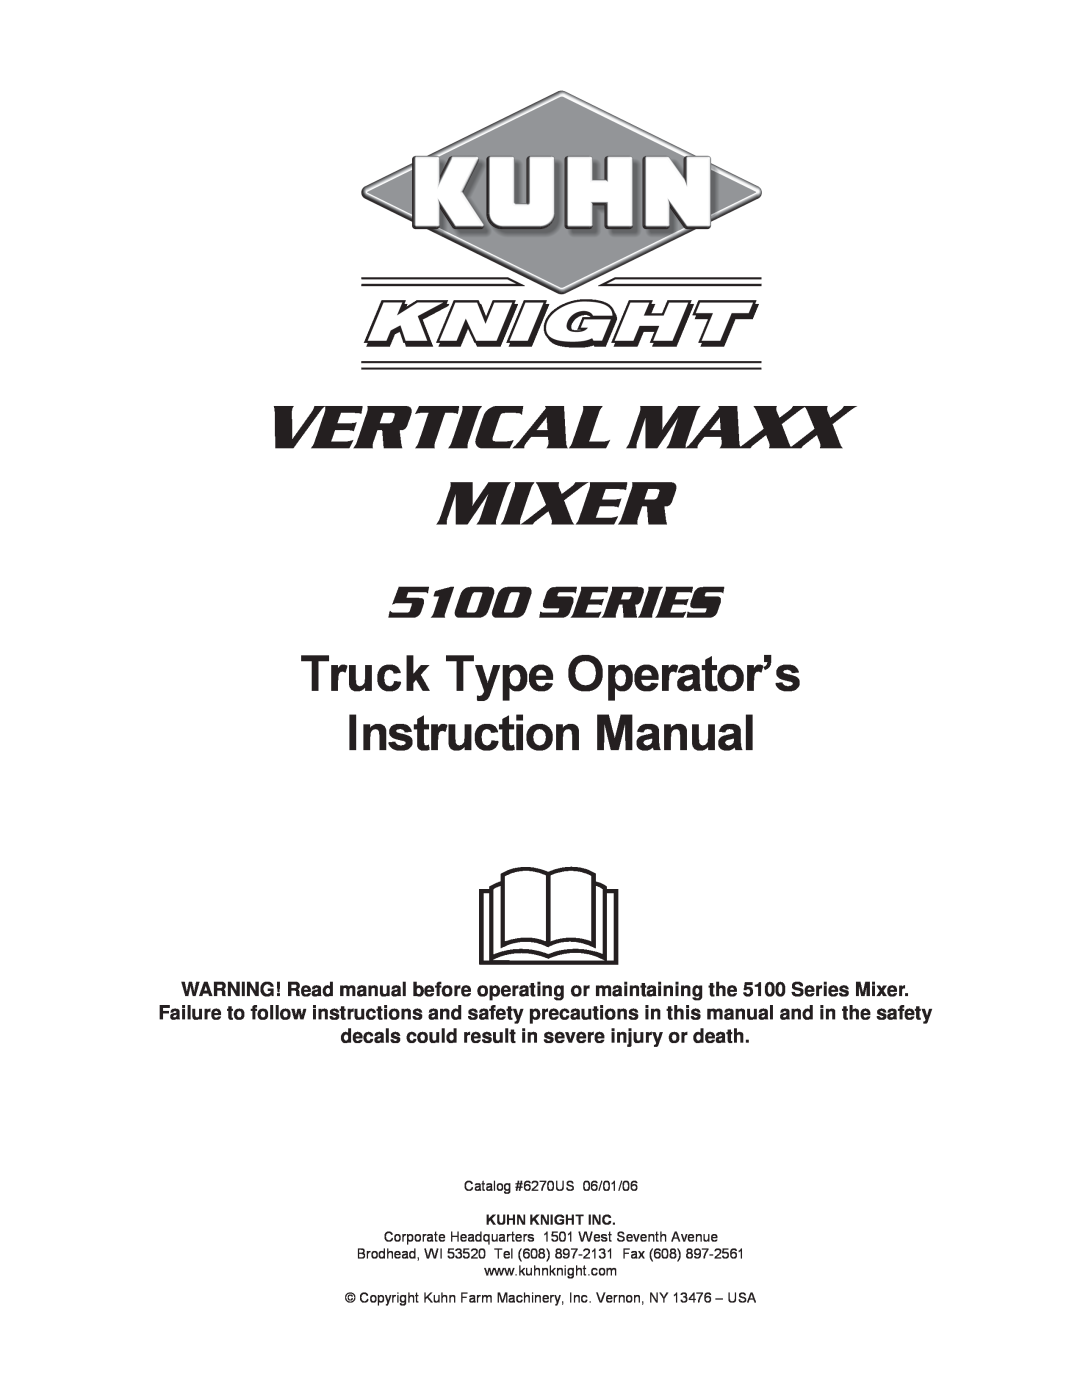 Kuhn Rikon 5100 instruction manual Vertical Maxx Mixer, Series 